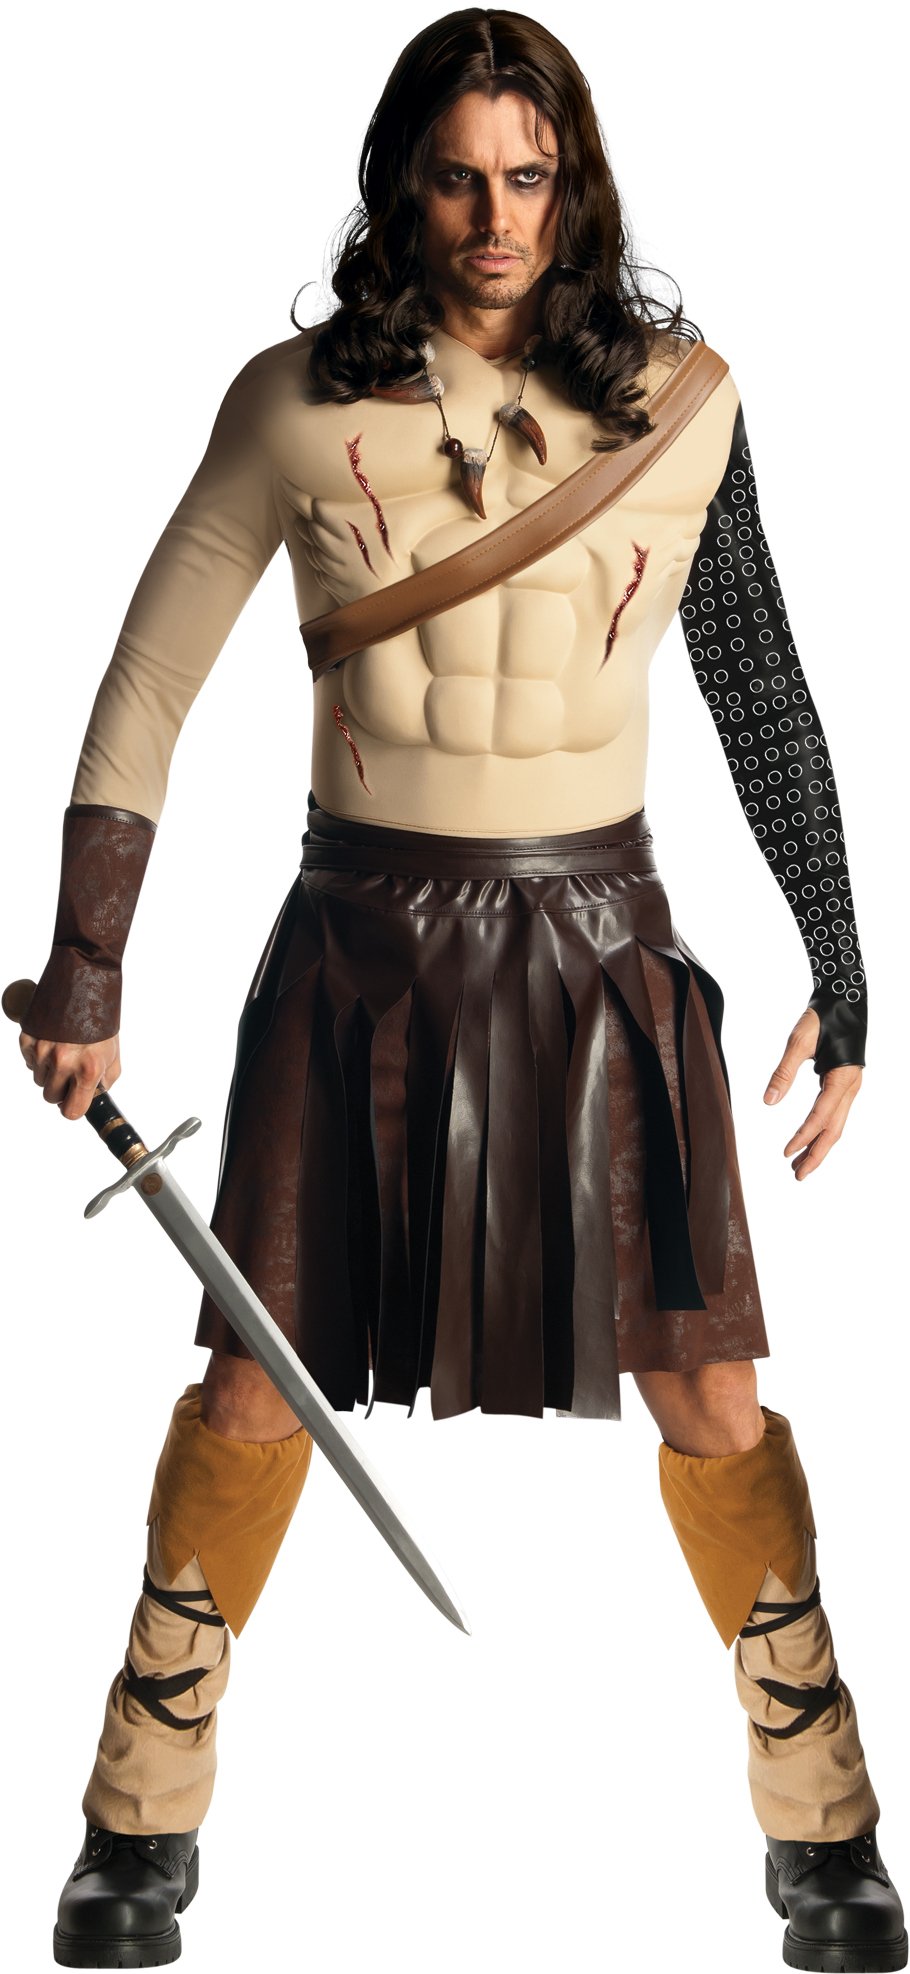 Conan The Barbarian - Deluxe Conan Adult Costume